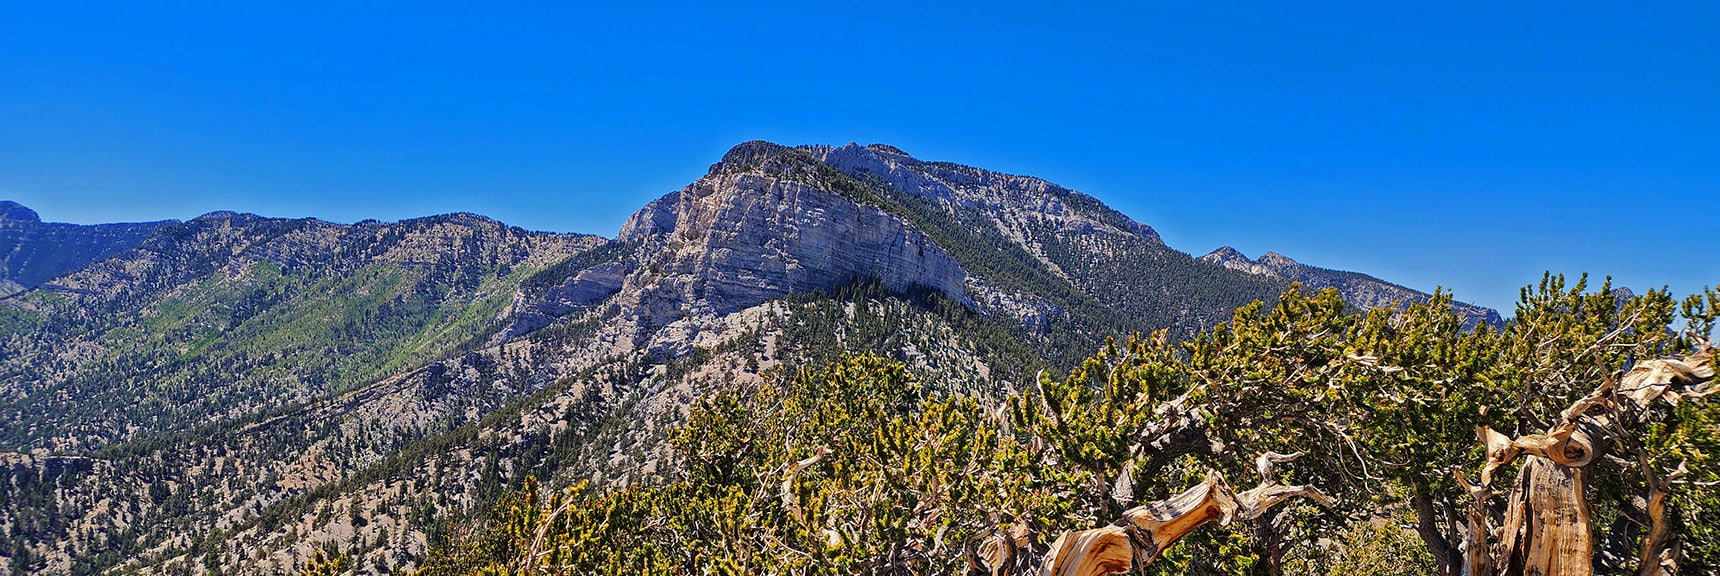 Mummy Mt. Toe and Summit from Fletcher Peak. | Fletcher Canyon / Fletcher Peak / Cockscomb Ridge Circuit | Mt. Charleston Wilderness | Spring Mountains, Nevada